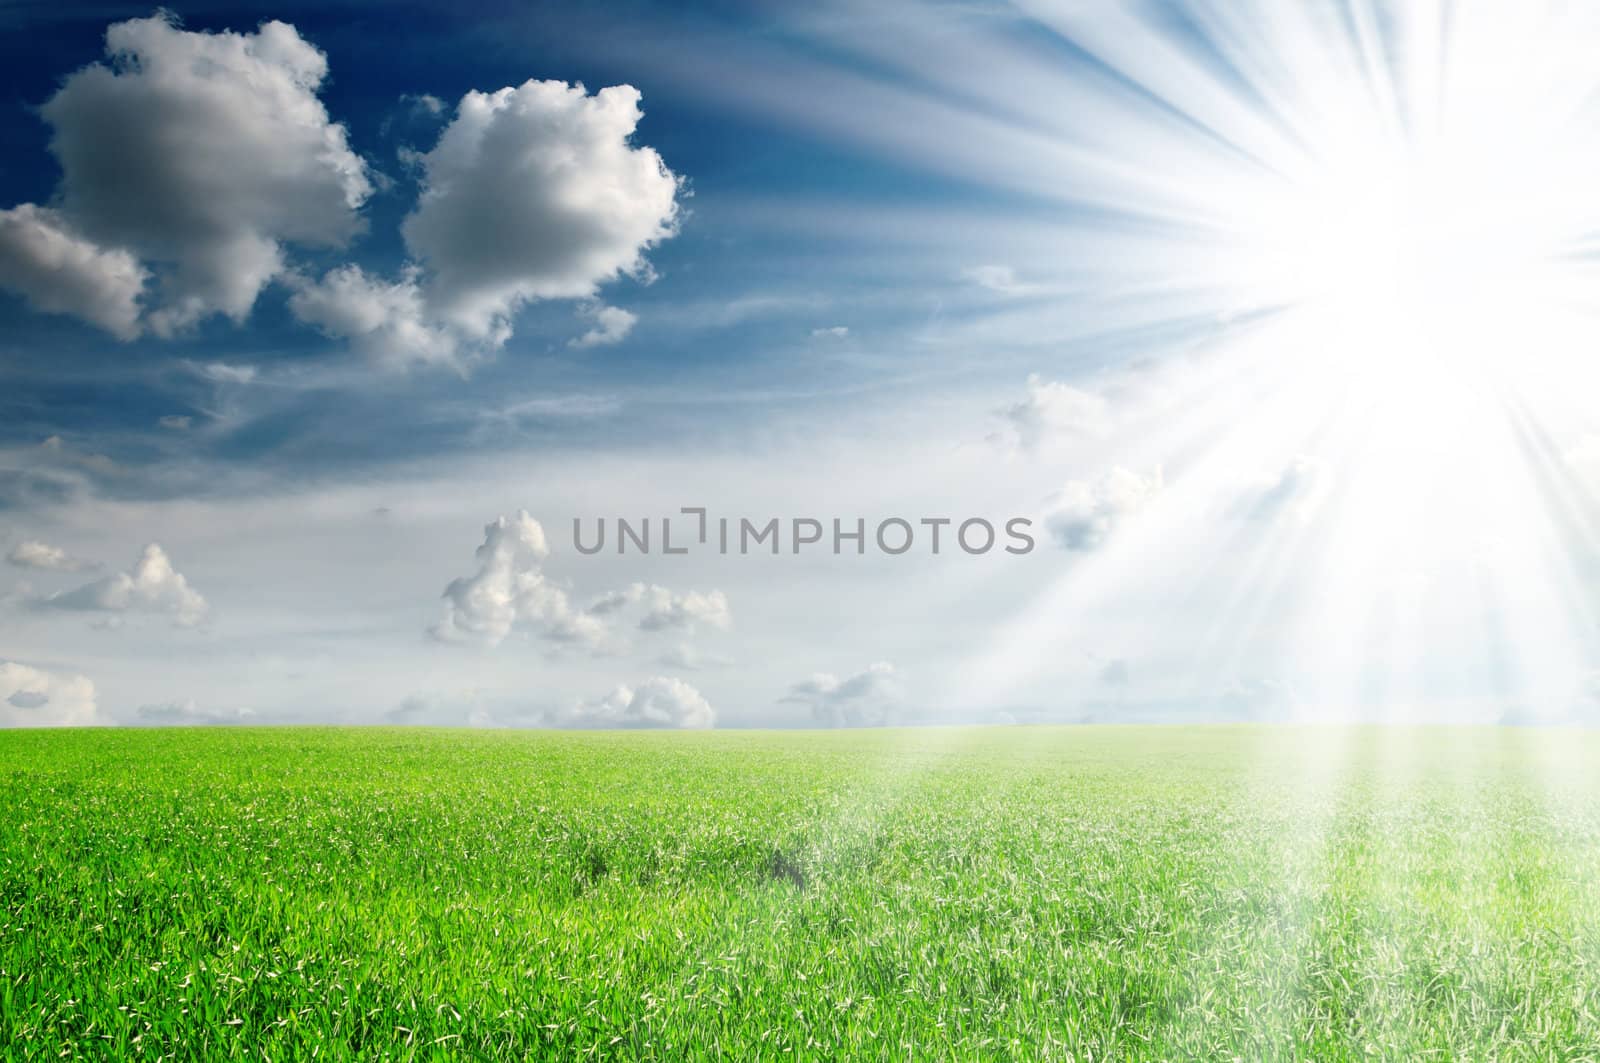 field and sun